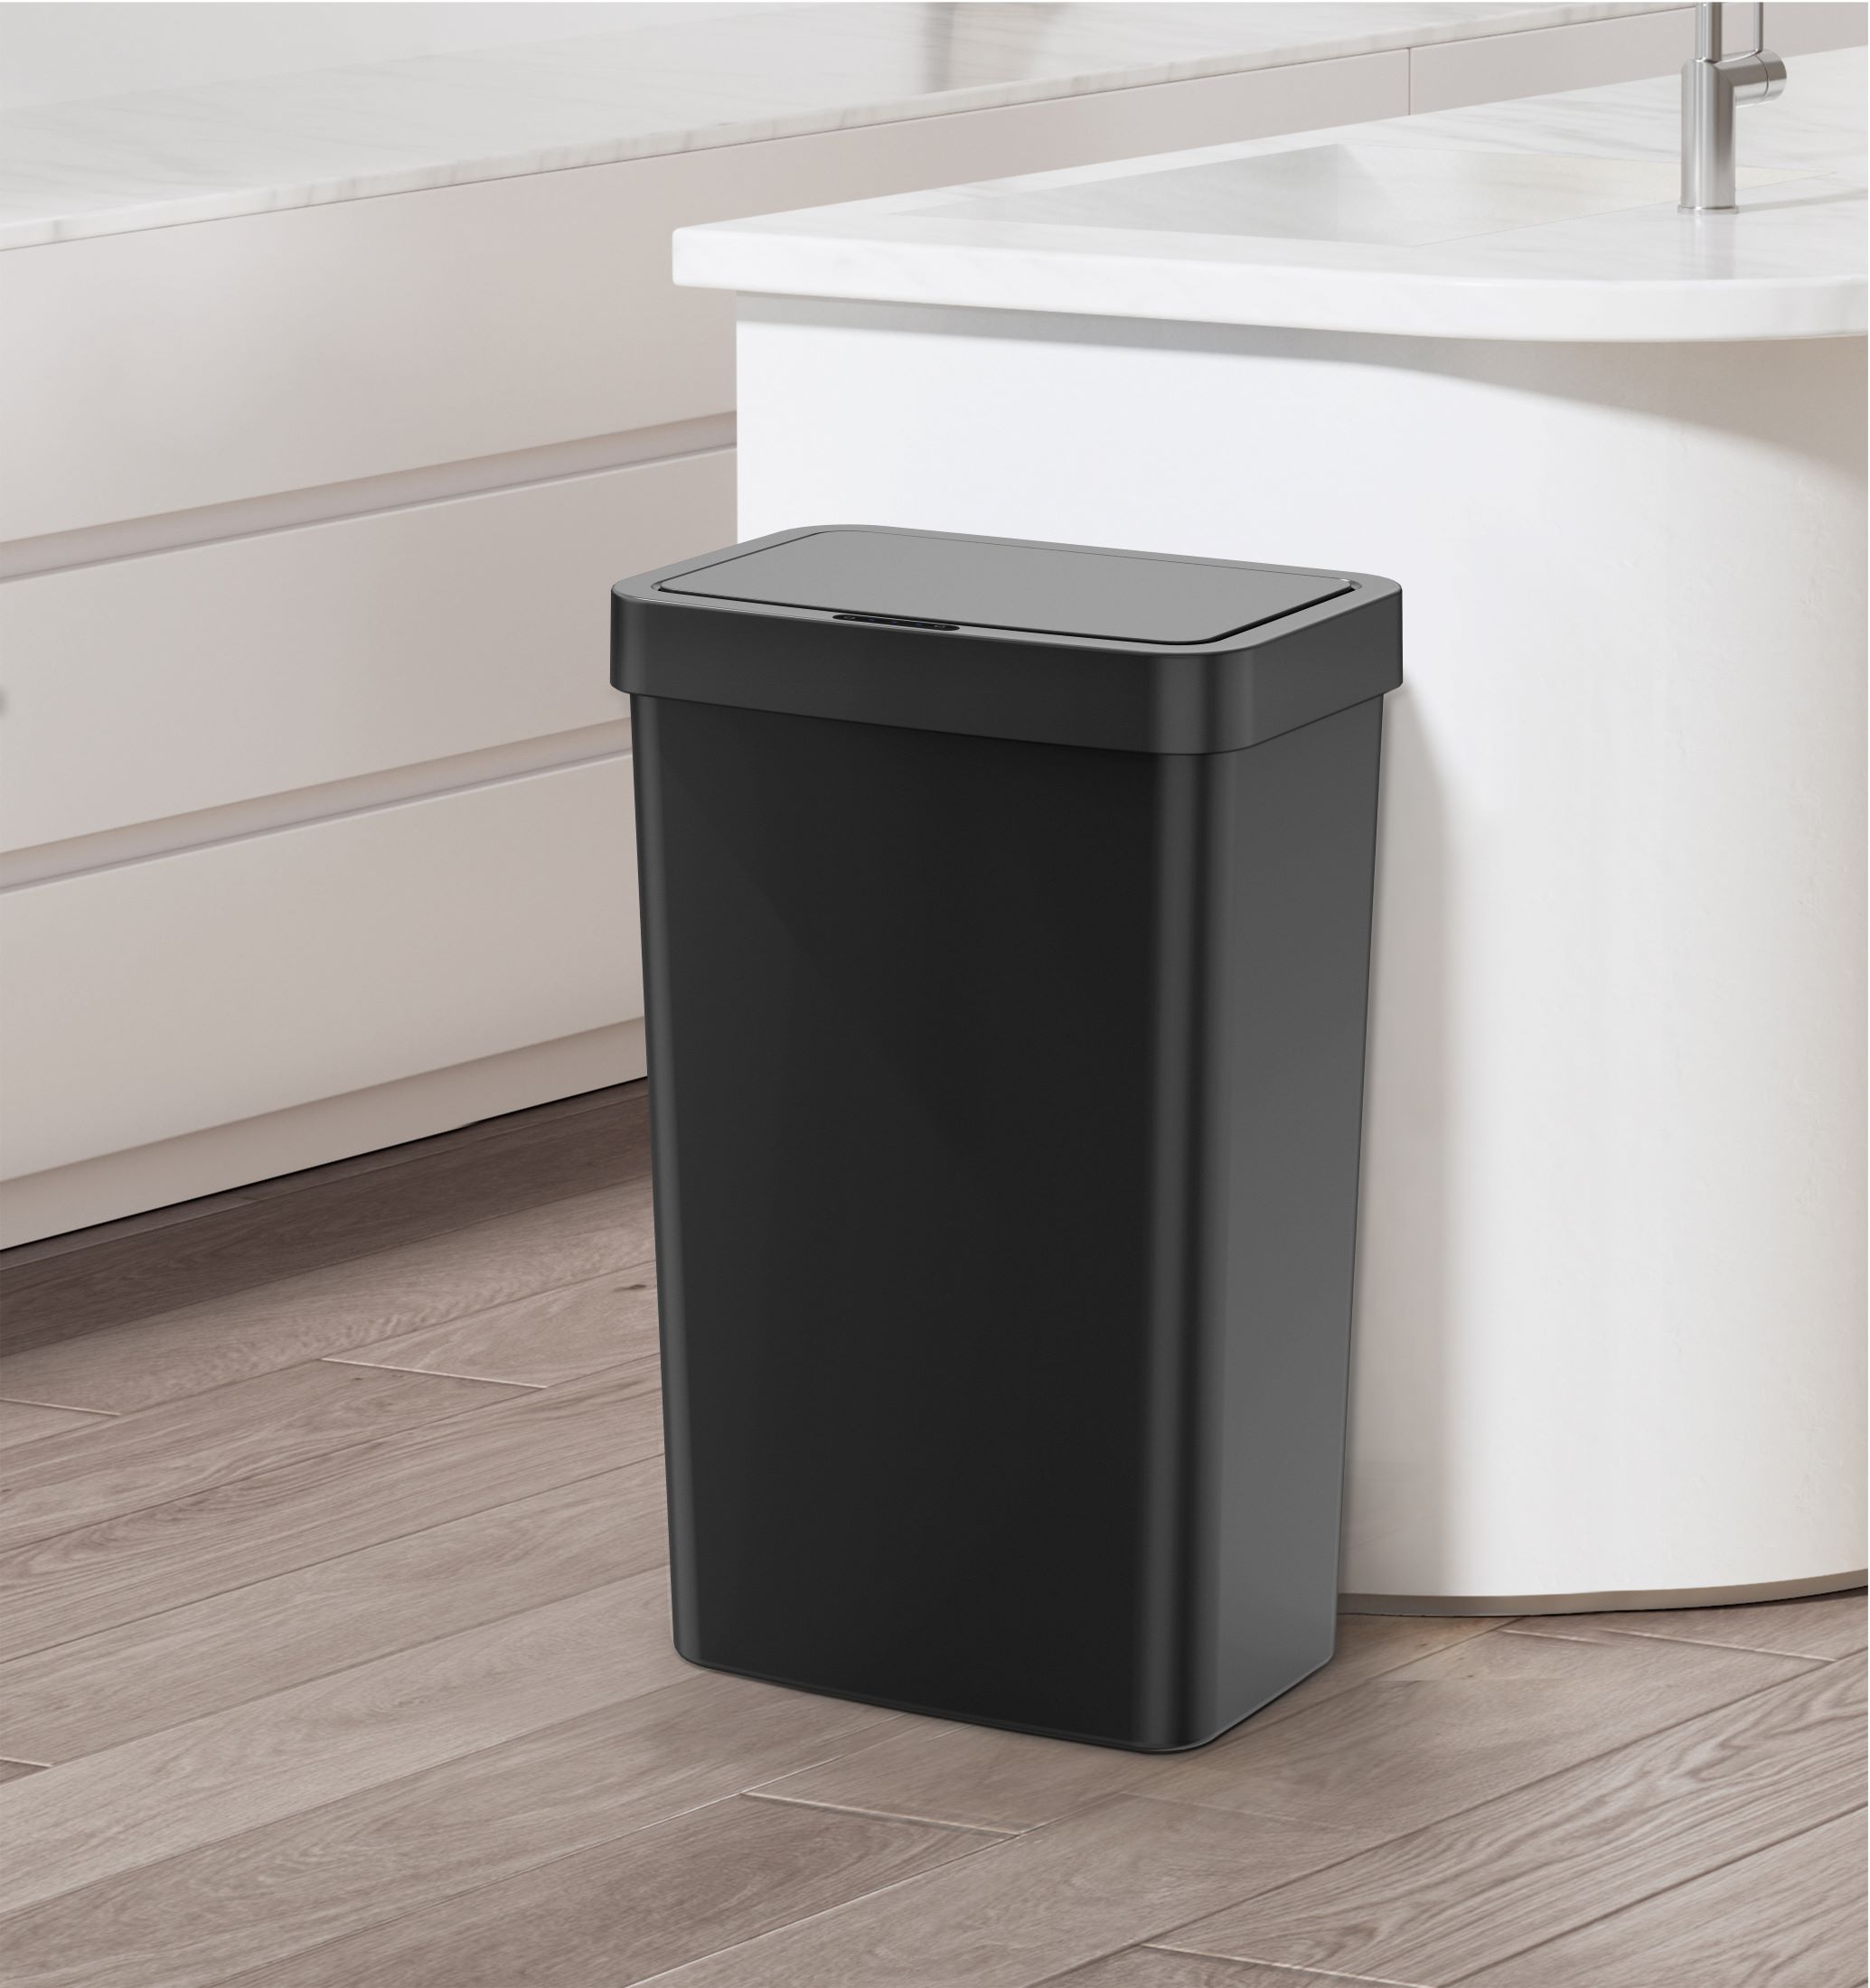 Mainstays 13.2 Gallon Trash Can, Plastic Motion Sensor Kitchen Trash Can, Black - image 2 of 12